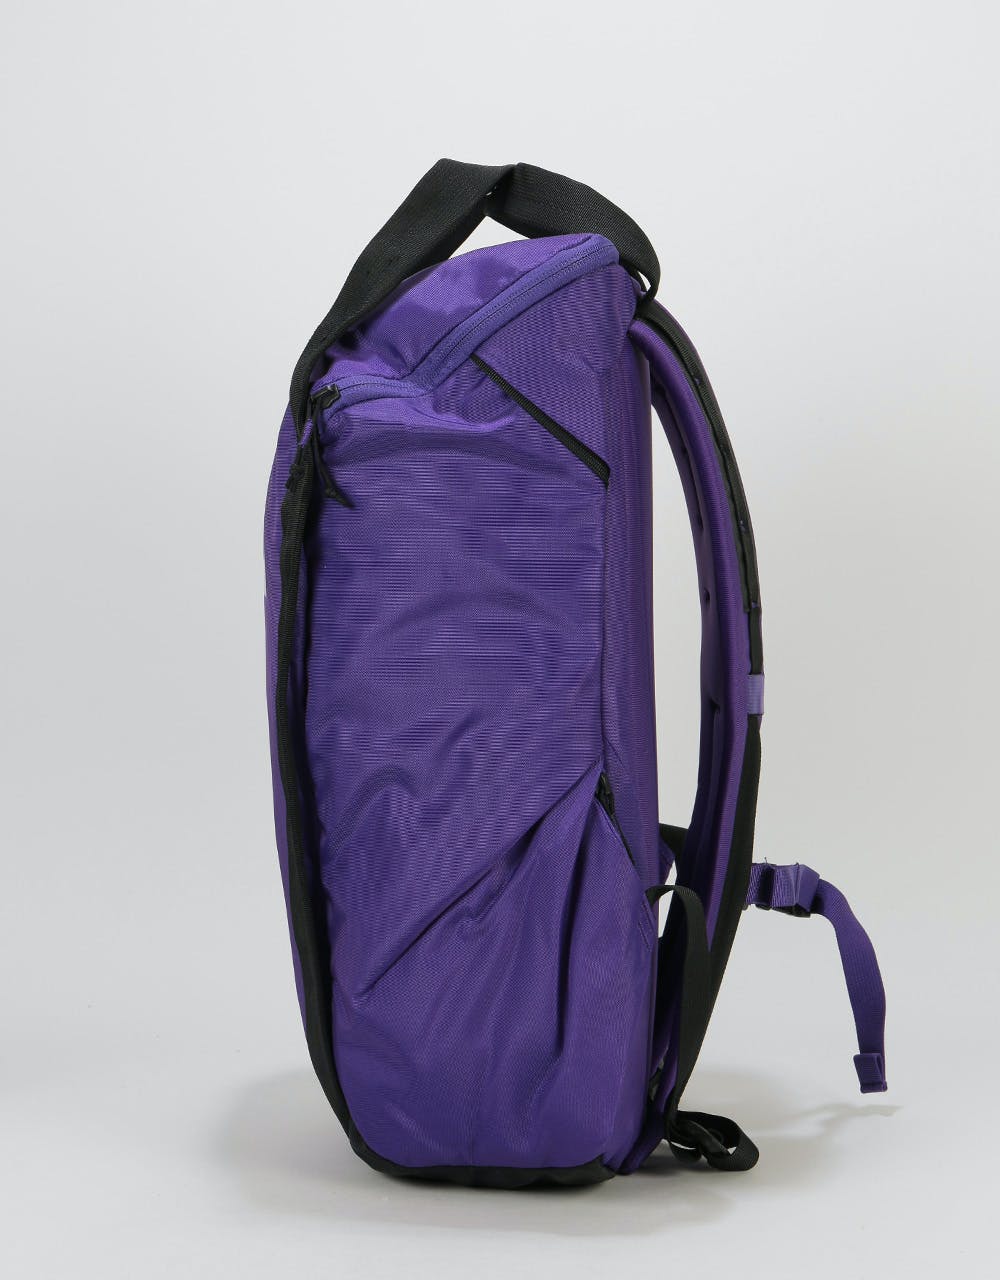 The North Face Instigator 20L Backpack - Hero Purple/TNF Black